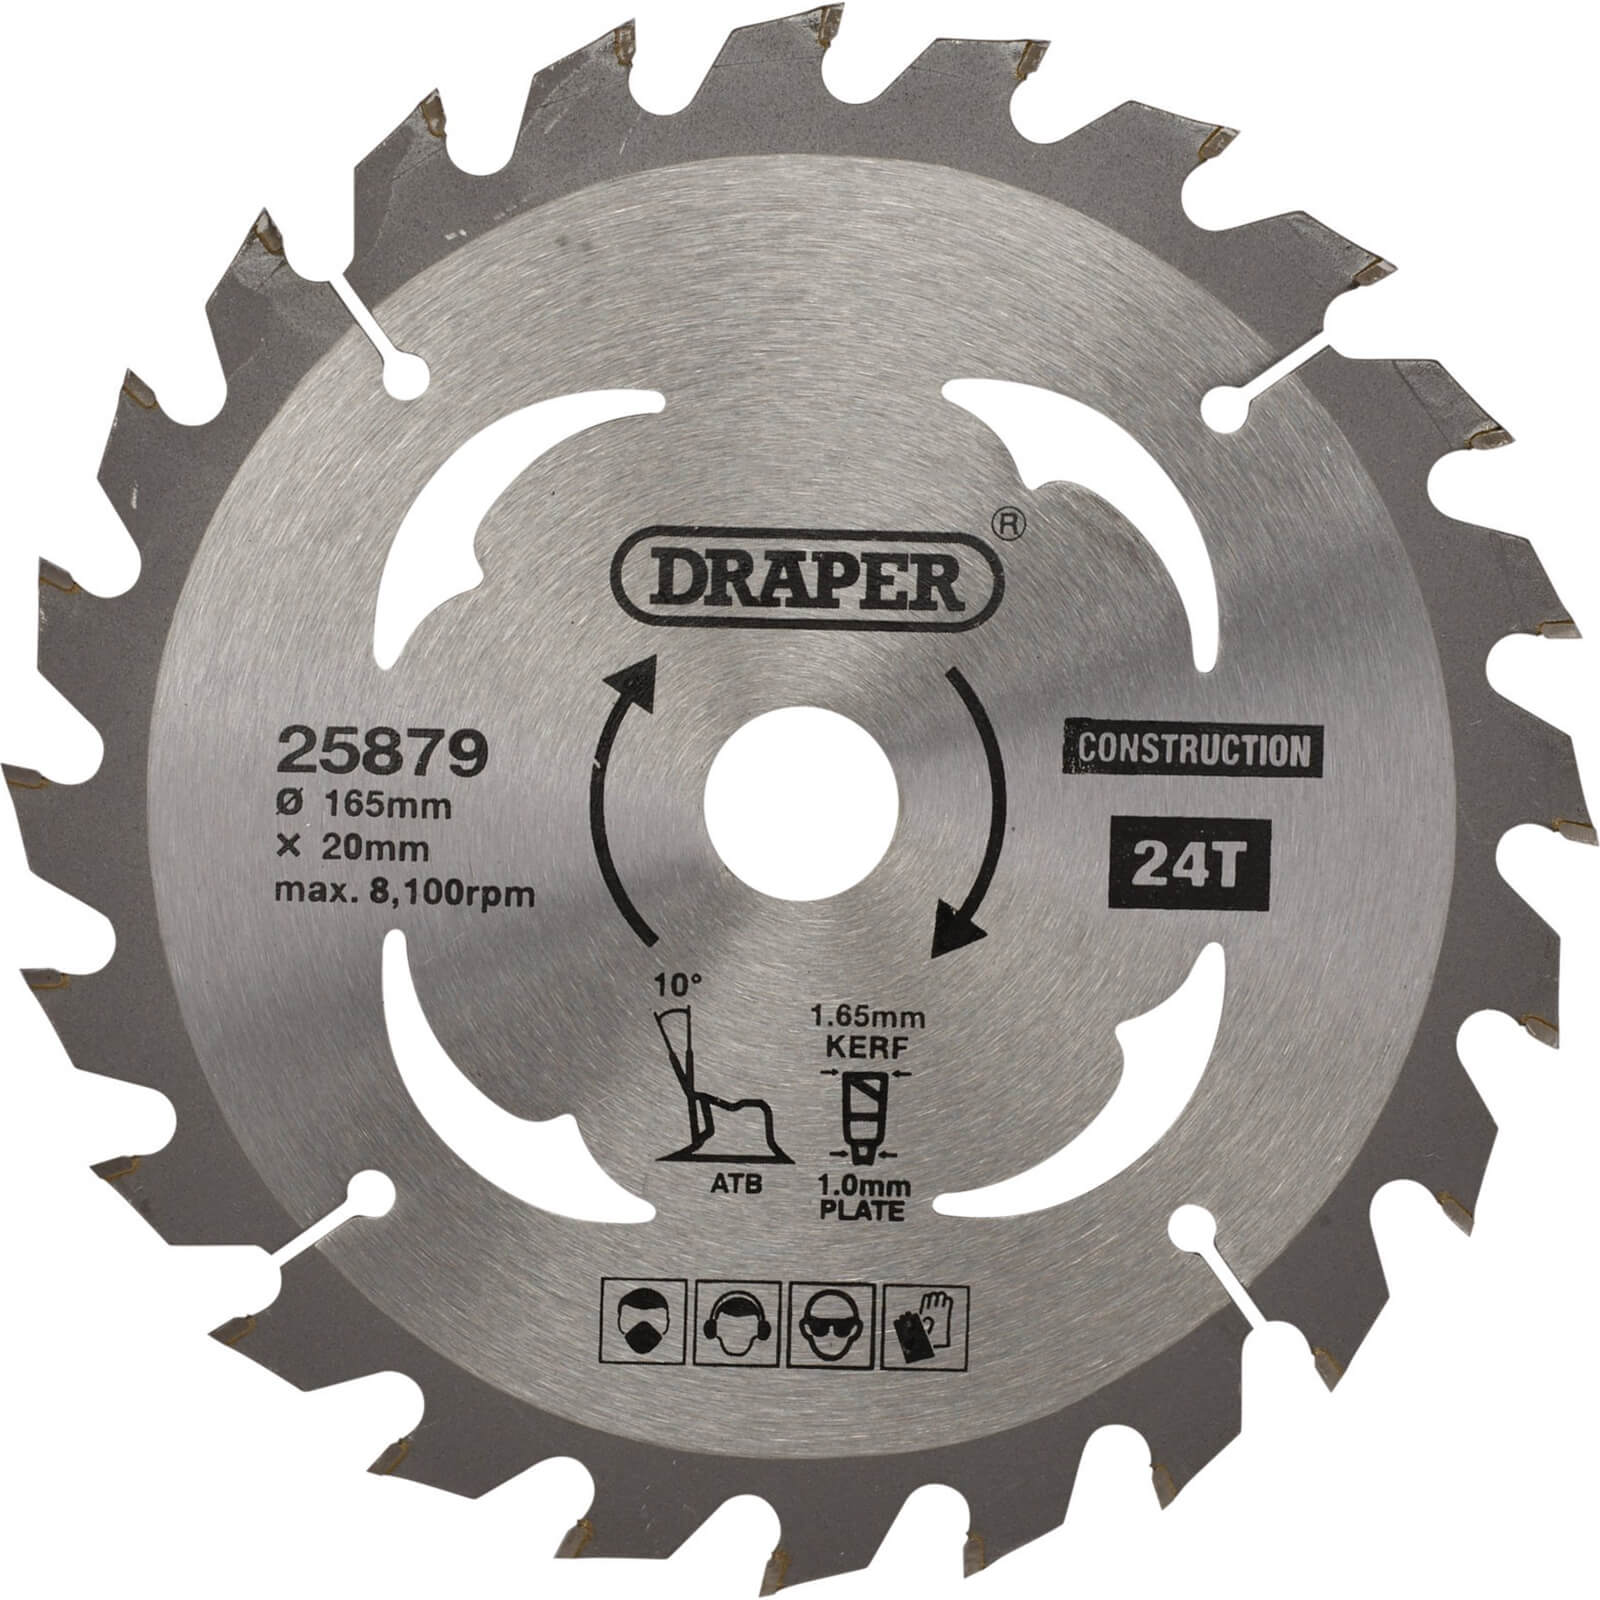 Image of Draper TCT Construction Circular Saw Blade 165mm 24T 20mm